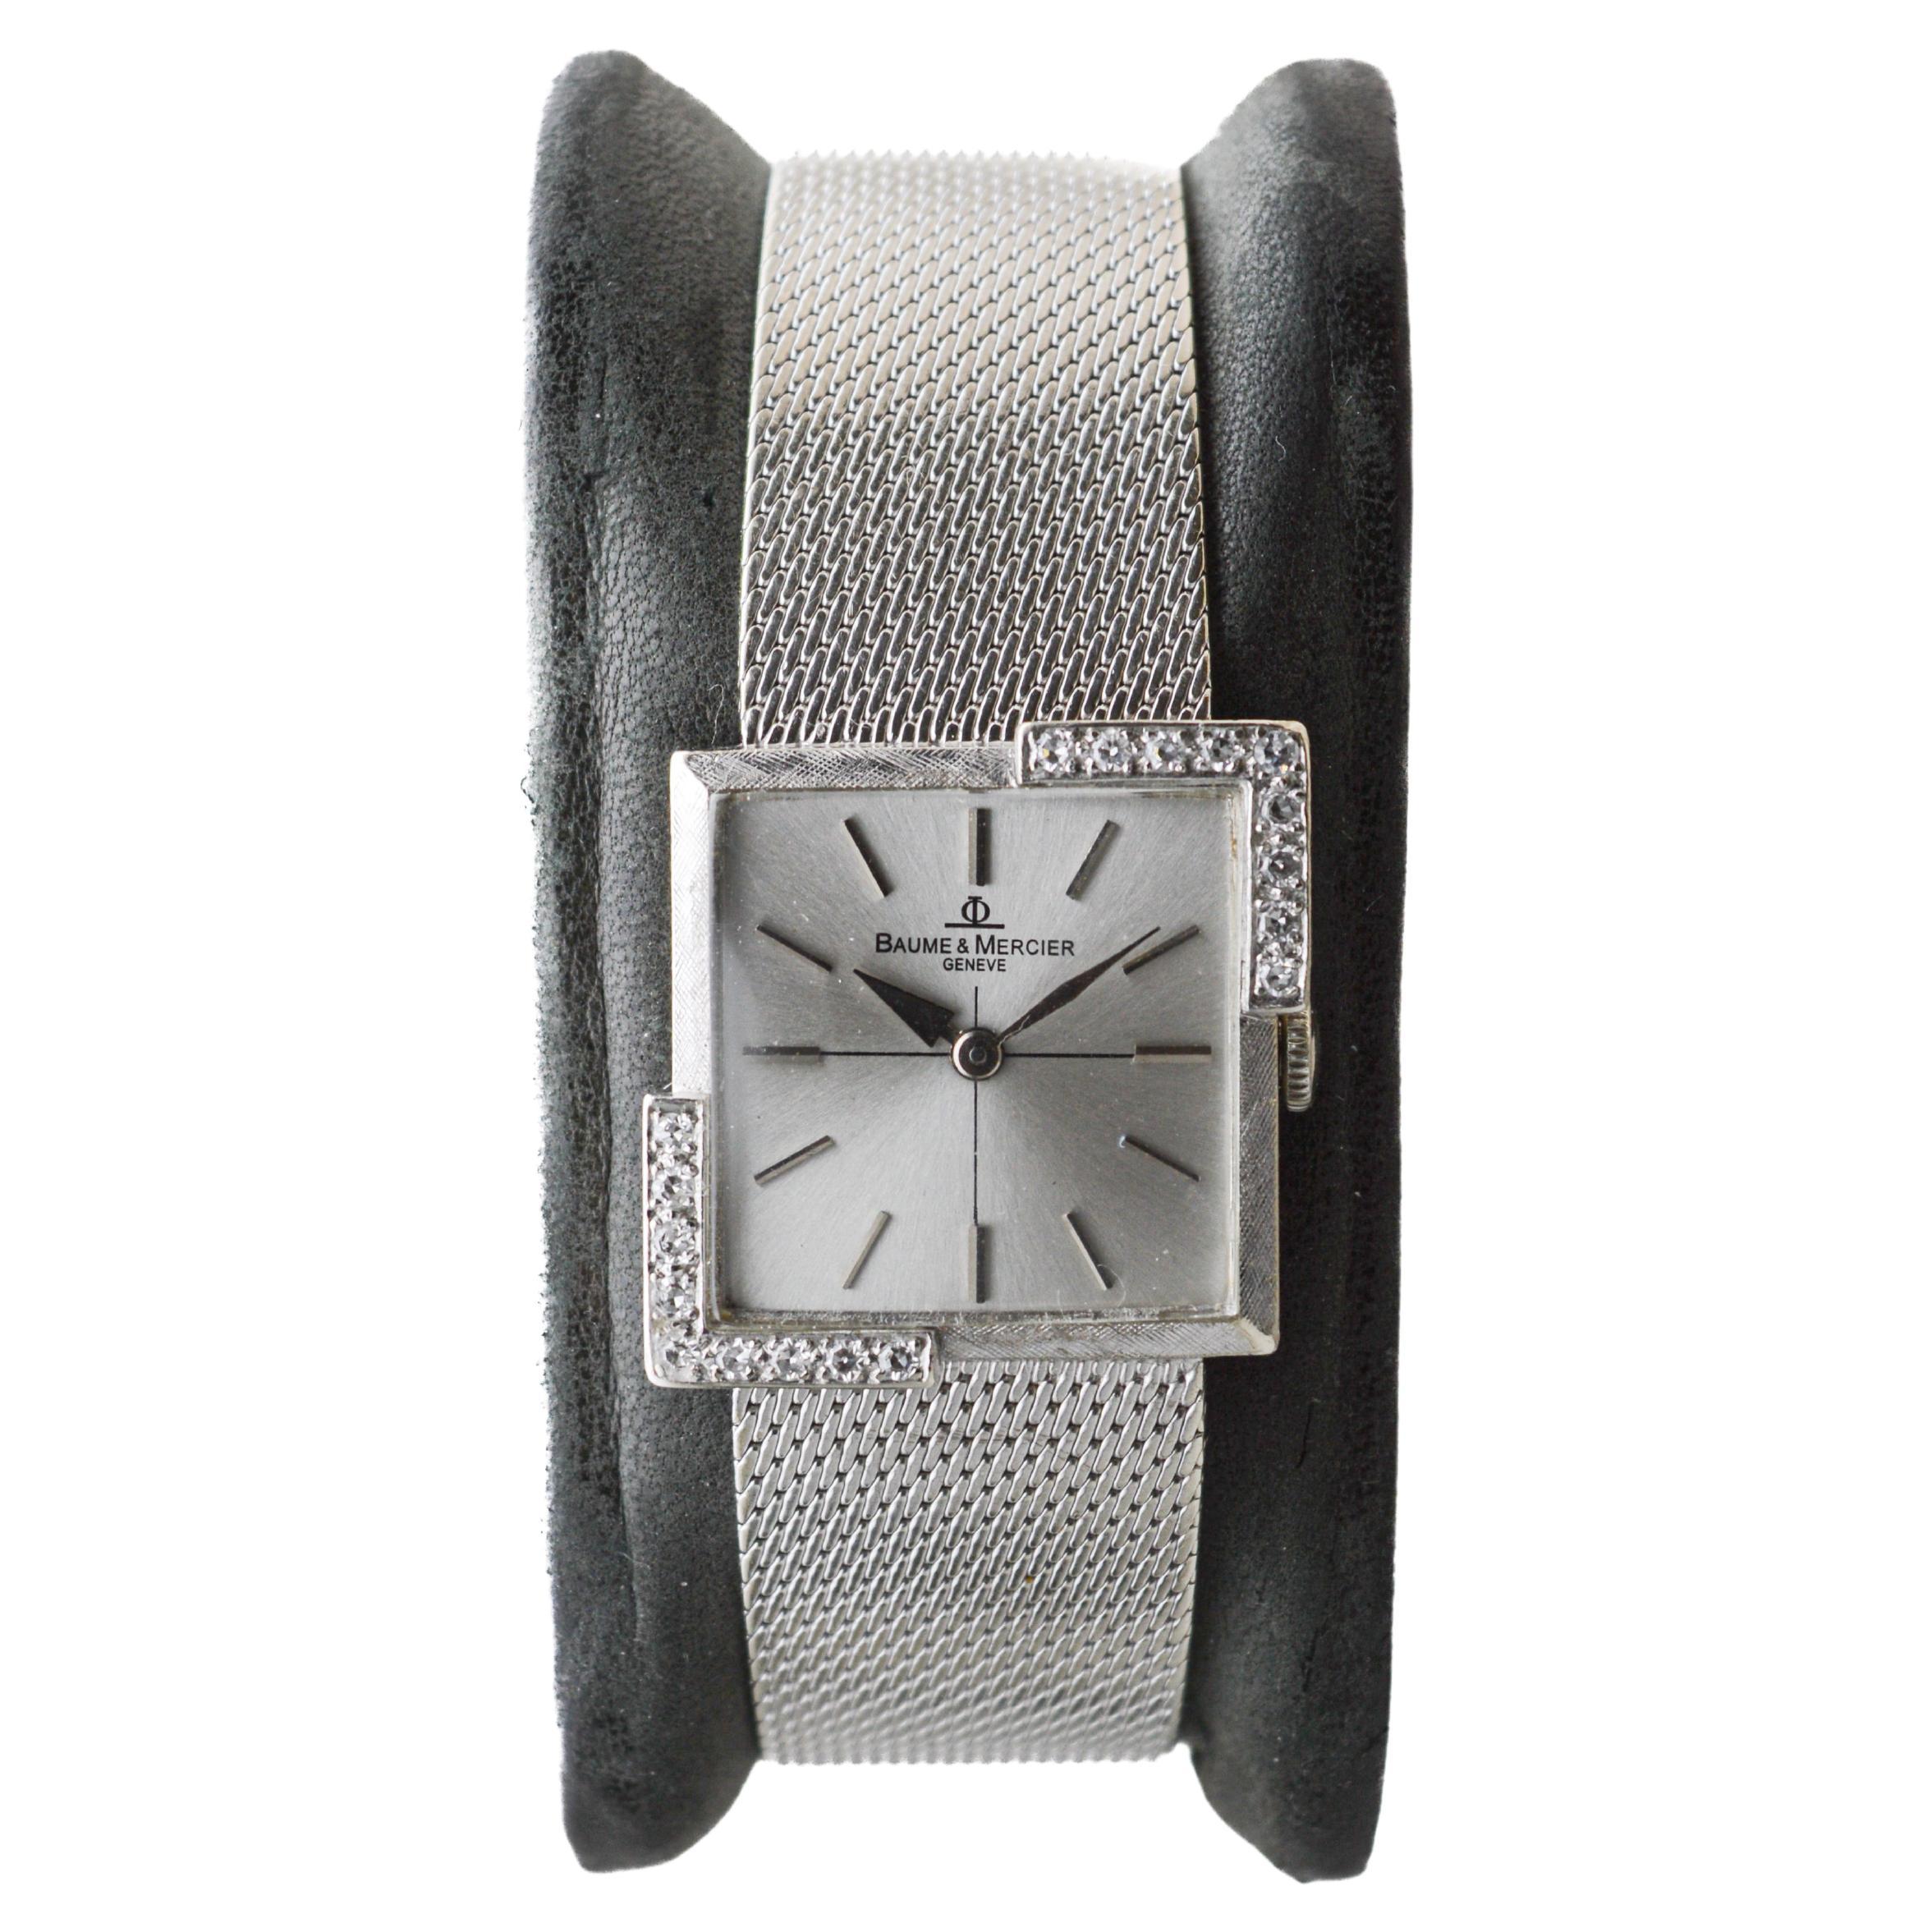 Baume Mercier 14Kt. Solid White Gold Bracelet Dress Watch with Diamond Accents